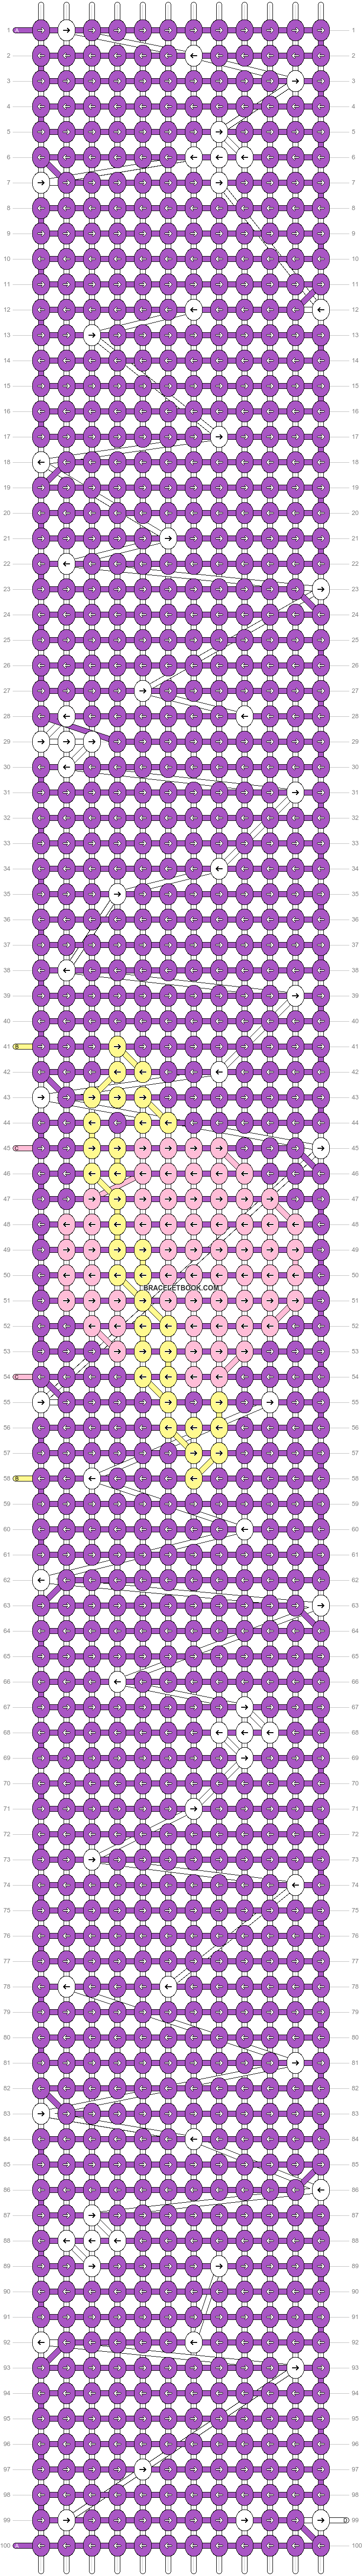 Alpha pattern #26932 variation #17208 pattern